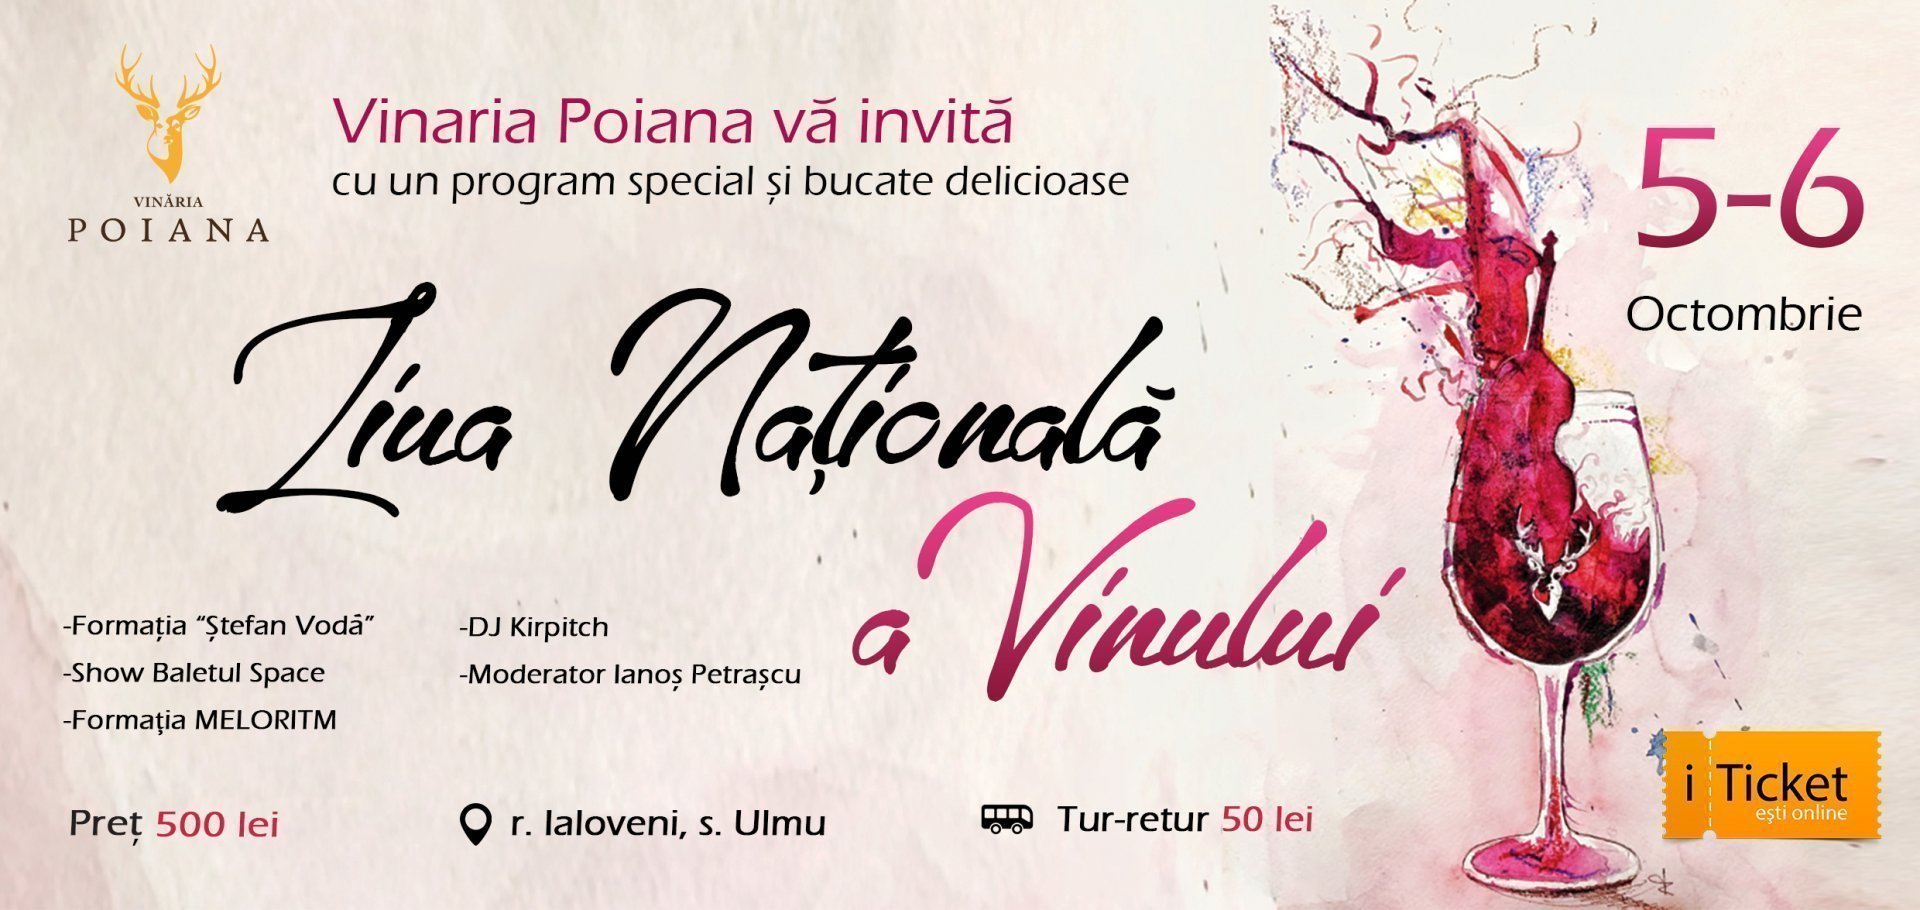 Vinaria Poiana sarbatoreste Ziua Nationala a Vinului 